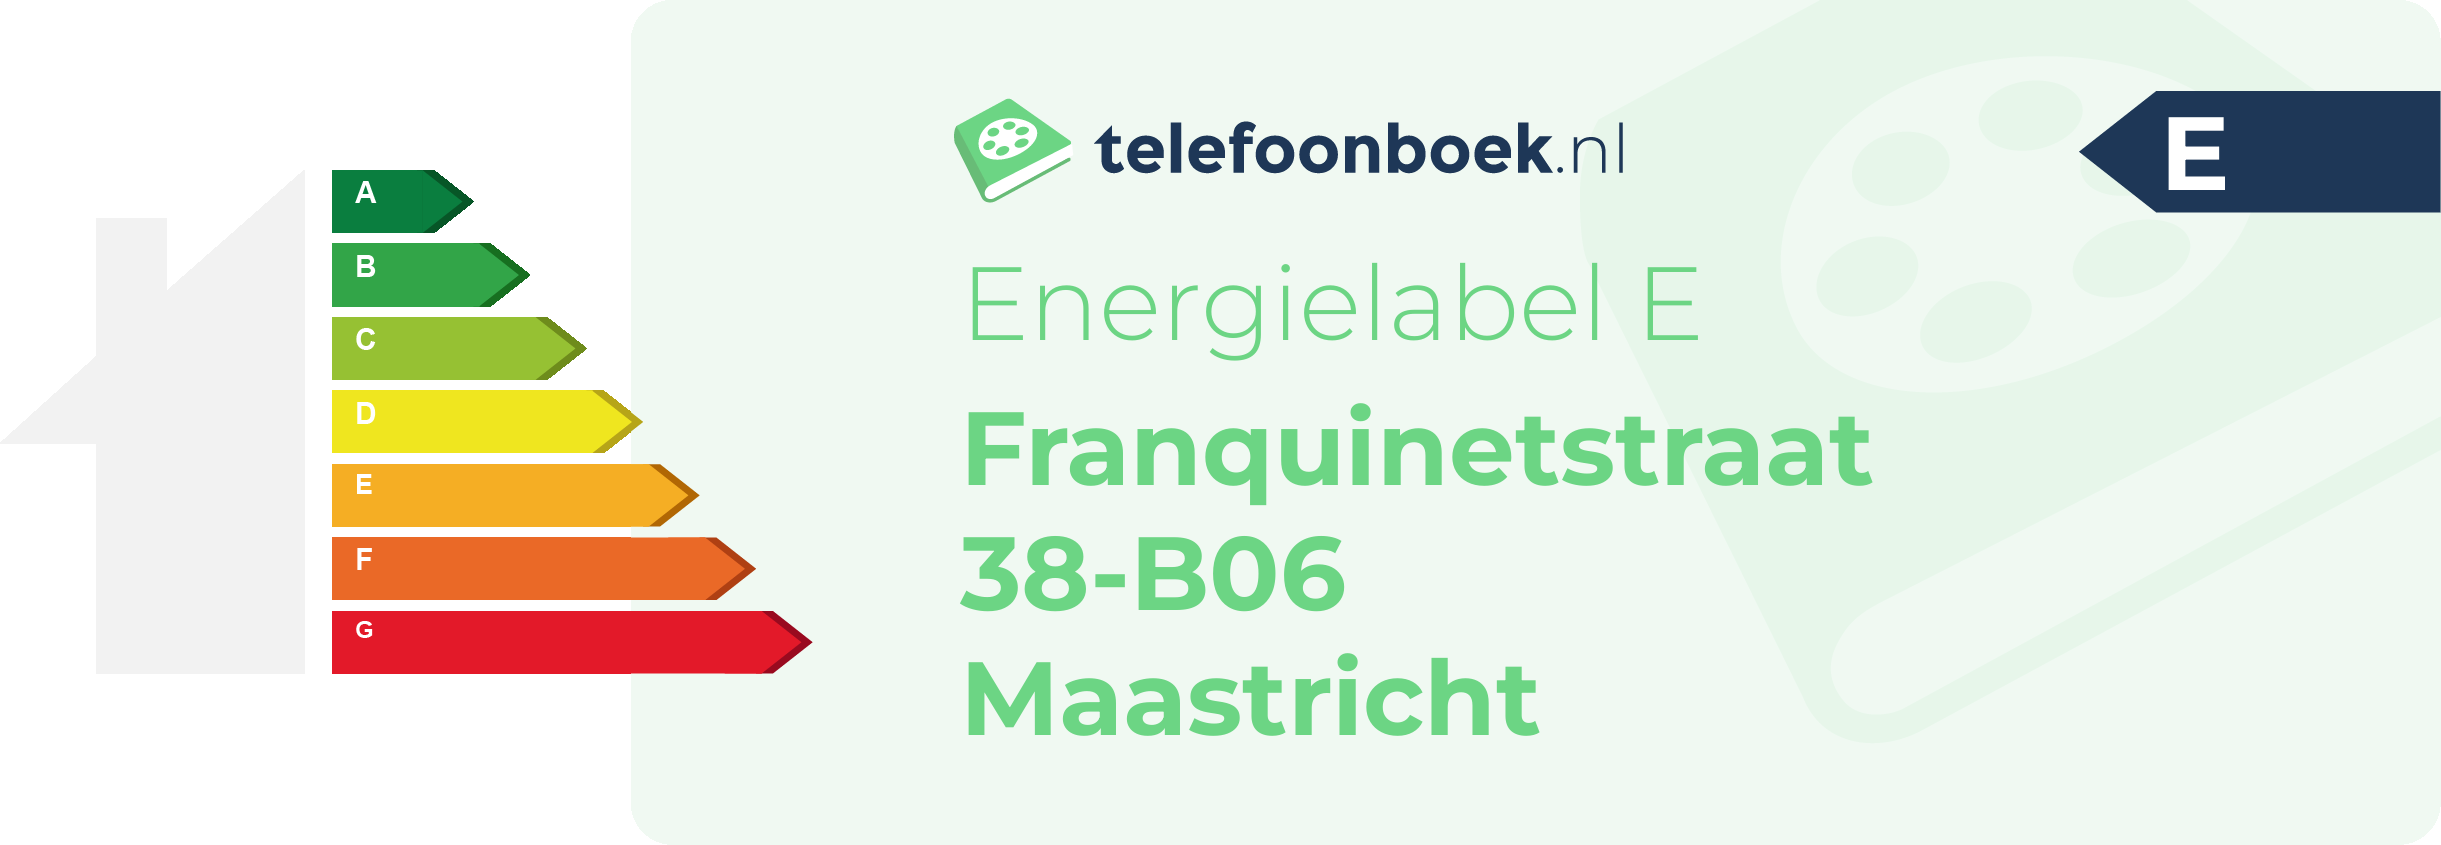 Energielabel Franquinetstraat 38-B06 Maastricht